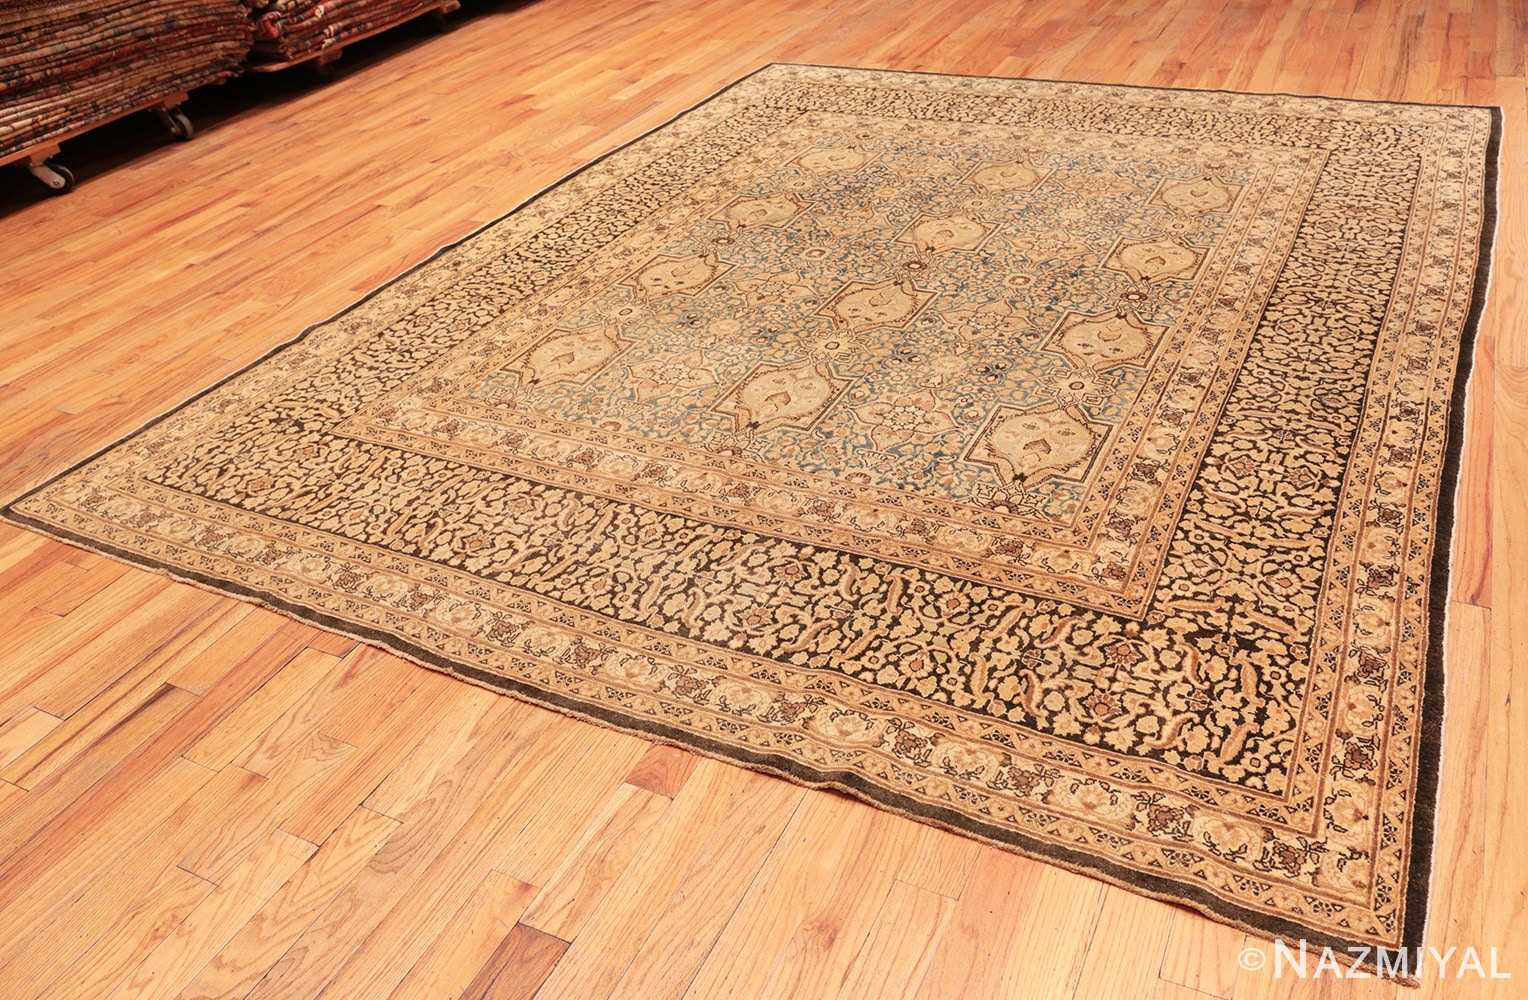 Full Antique Persian Khorassan rug 70075 by Nazmiyal